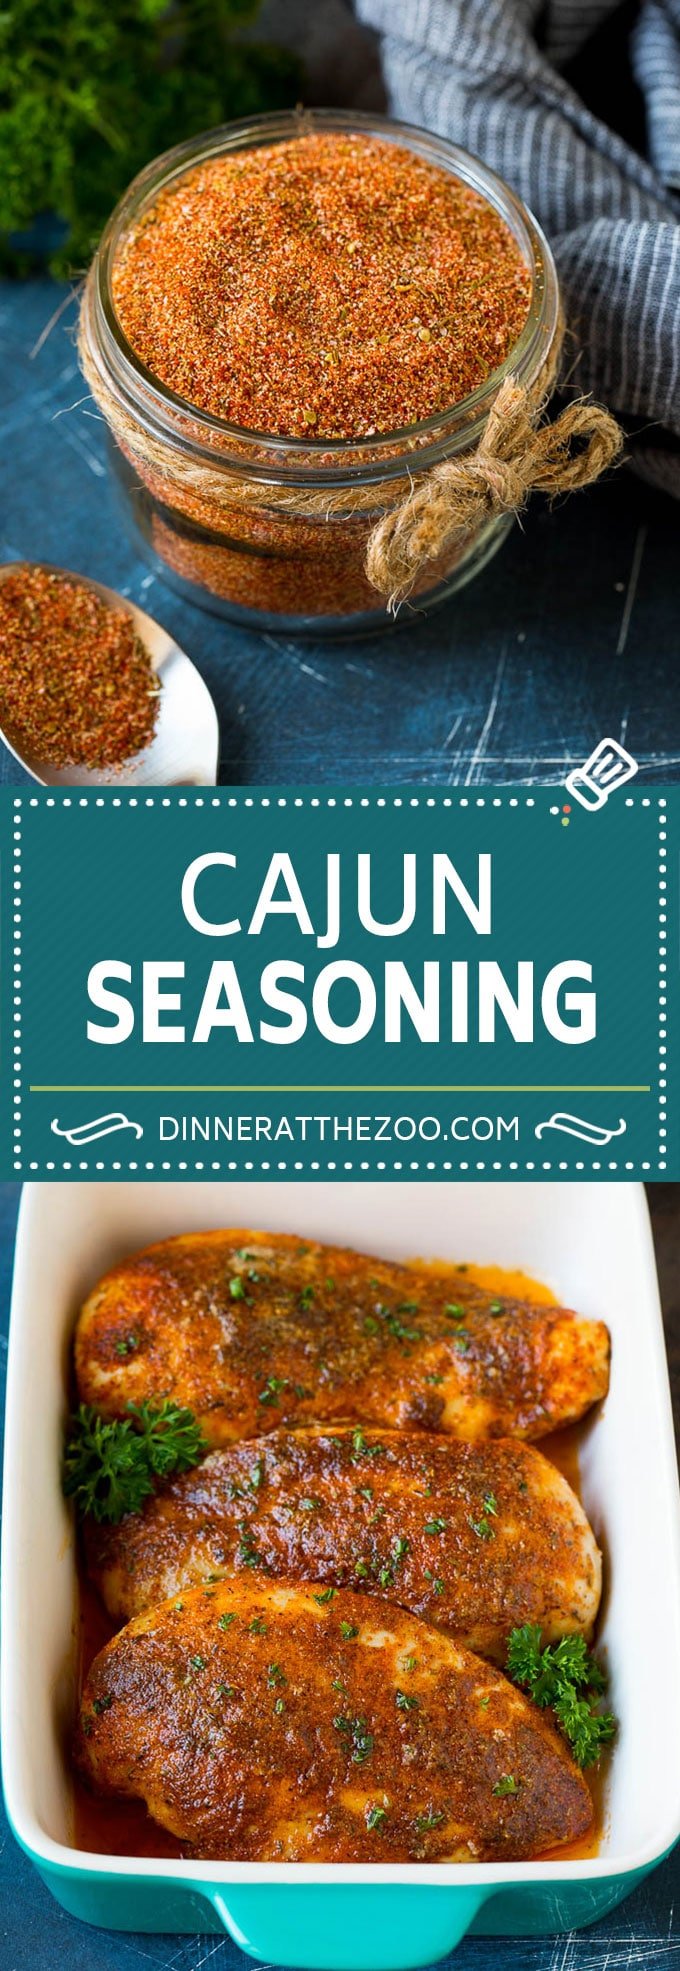 Cajun Seasoning #cajun #dinneratthezoo